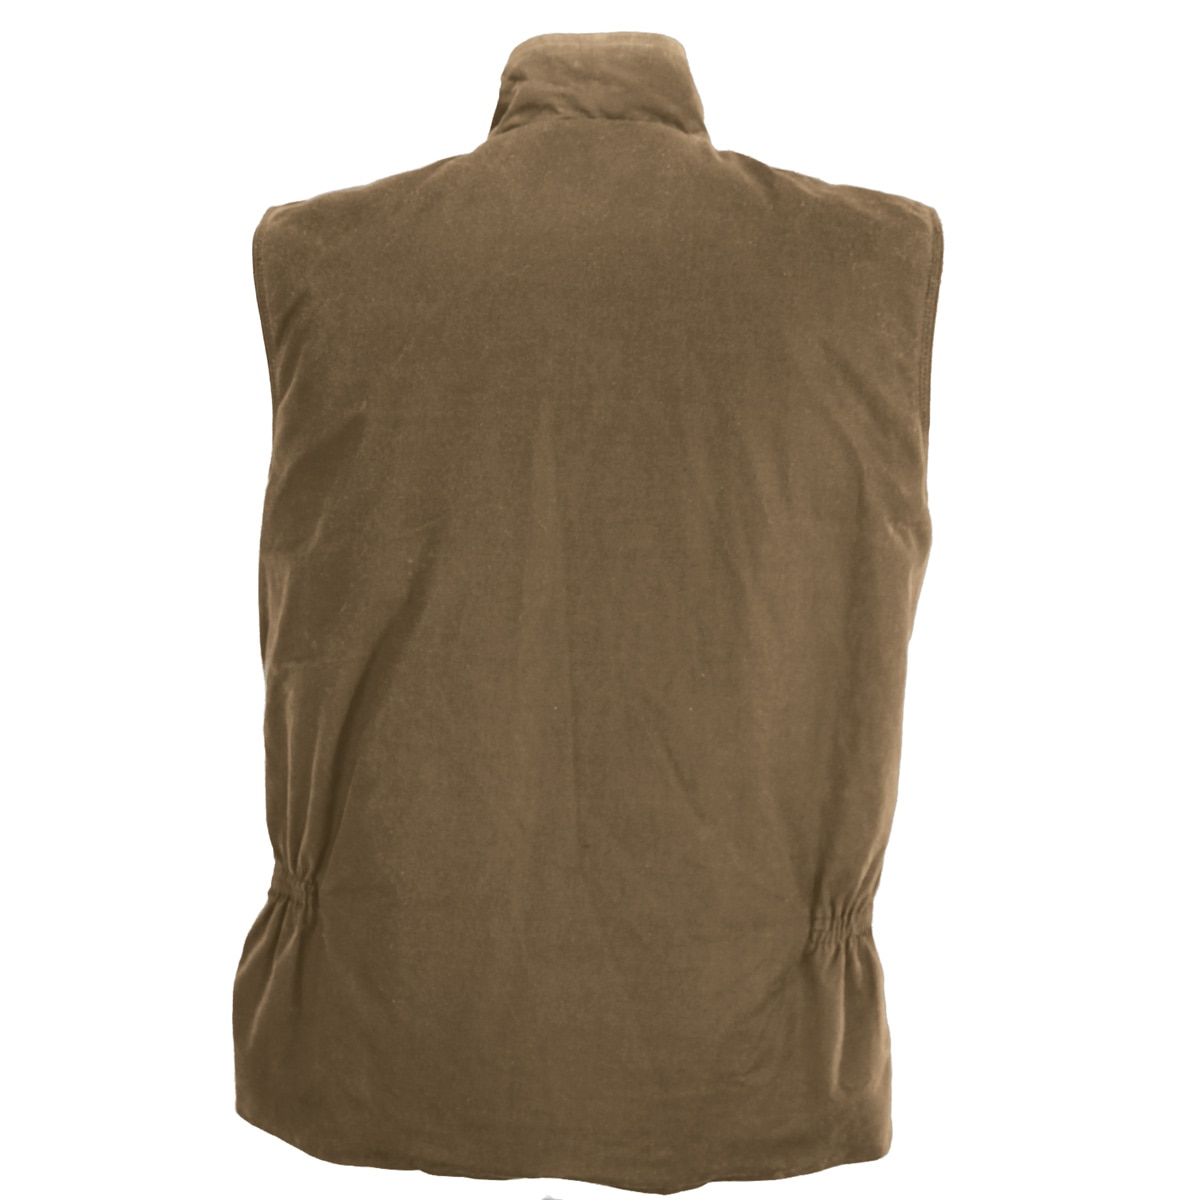 Outback Sawbuck Light Weight Oilskin Waterproof Vest